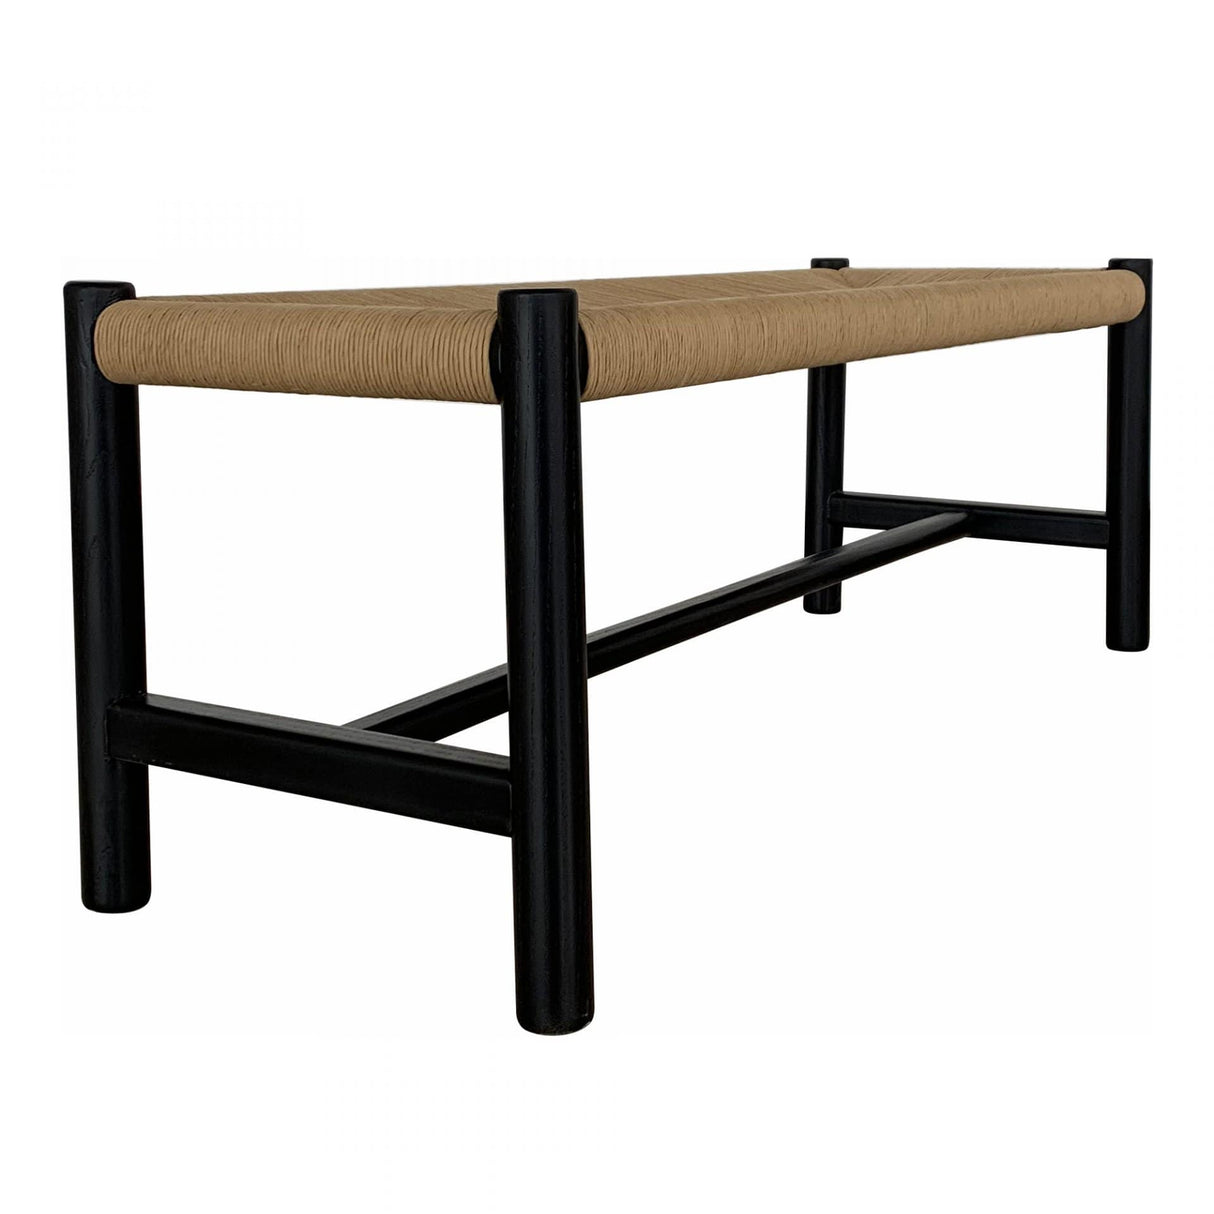 BLU Home Hawthorn Bench Furniture moes-FG-1027-24 840026432603